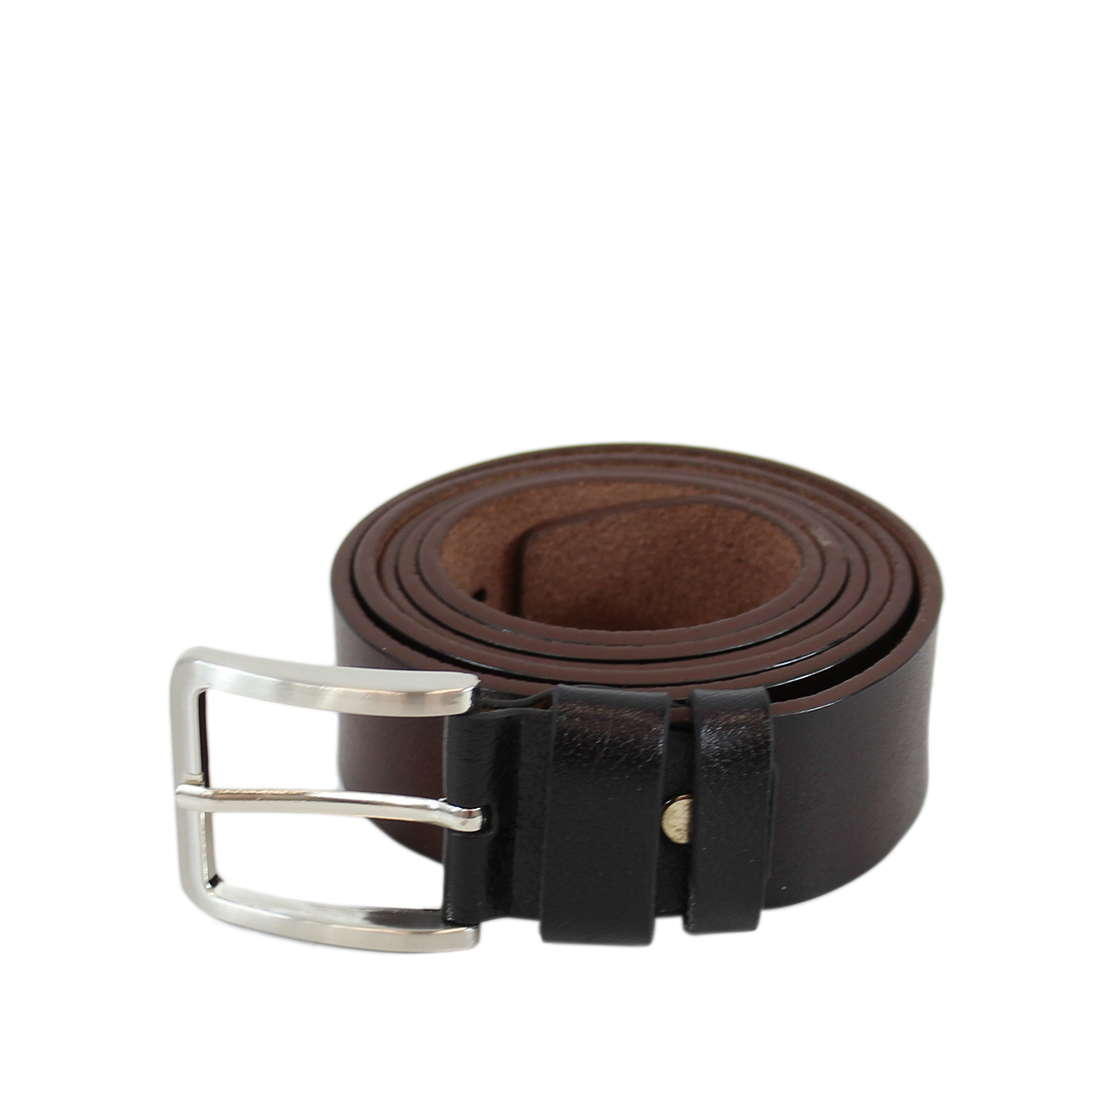 Real leather plain belt